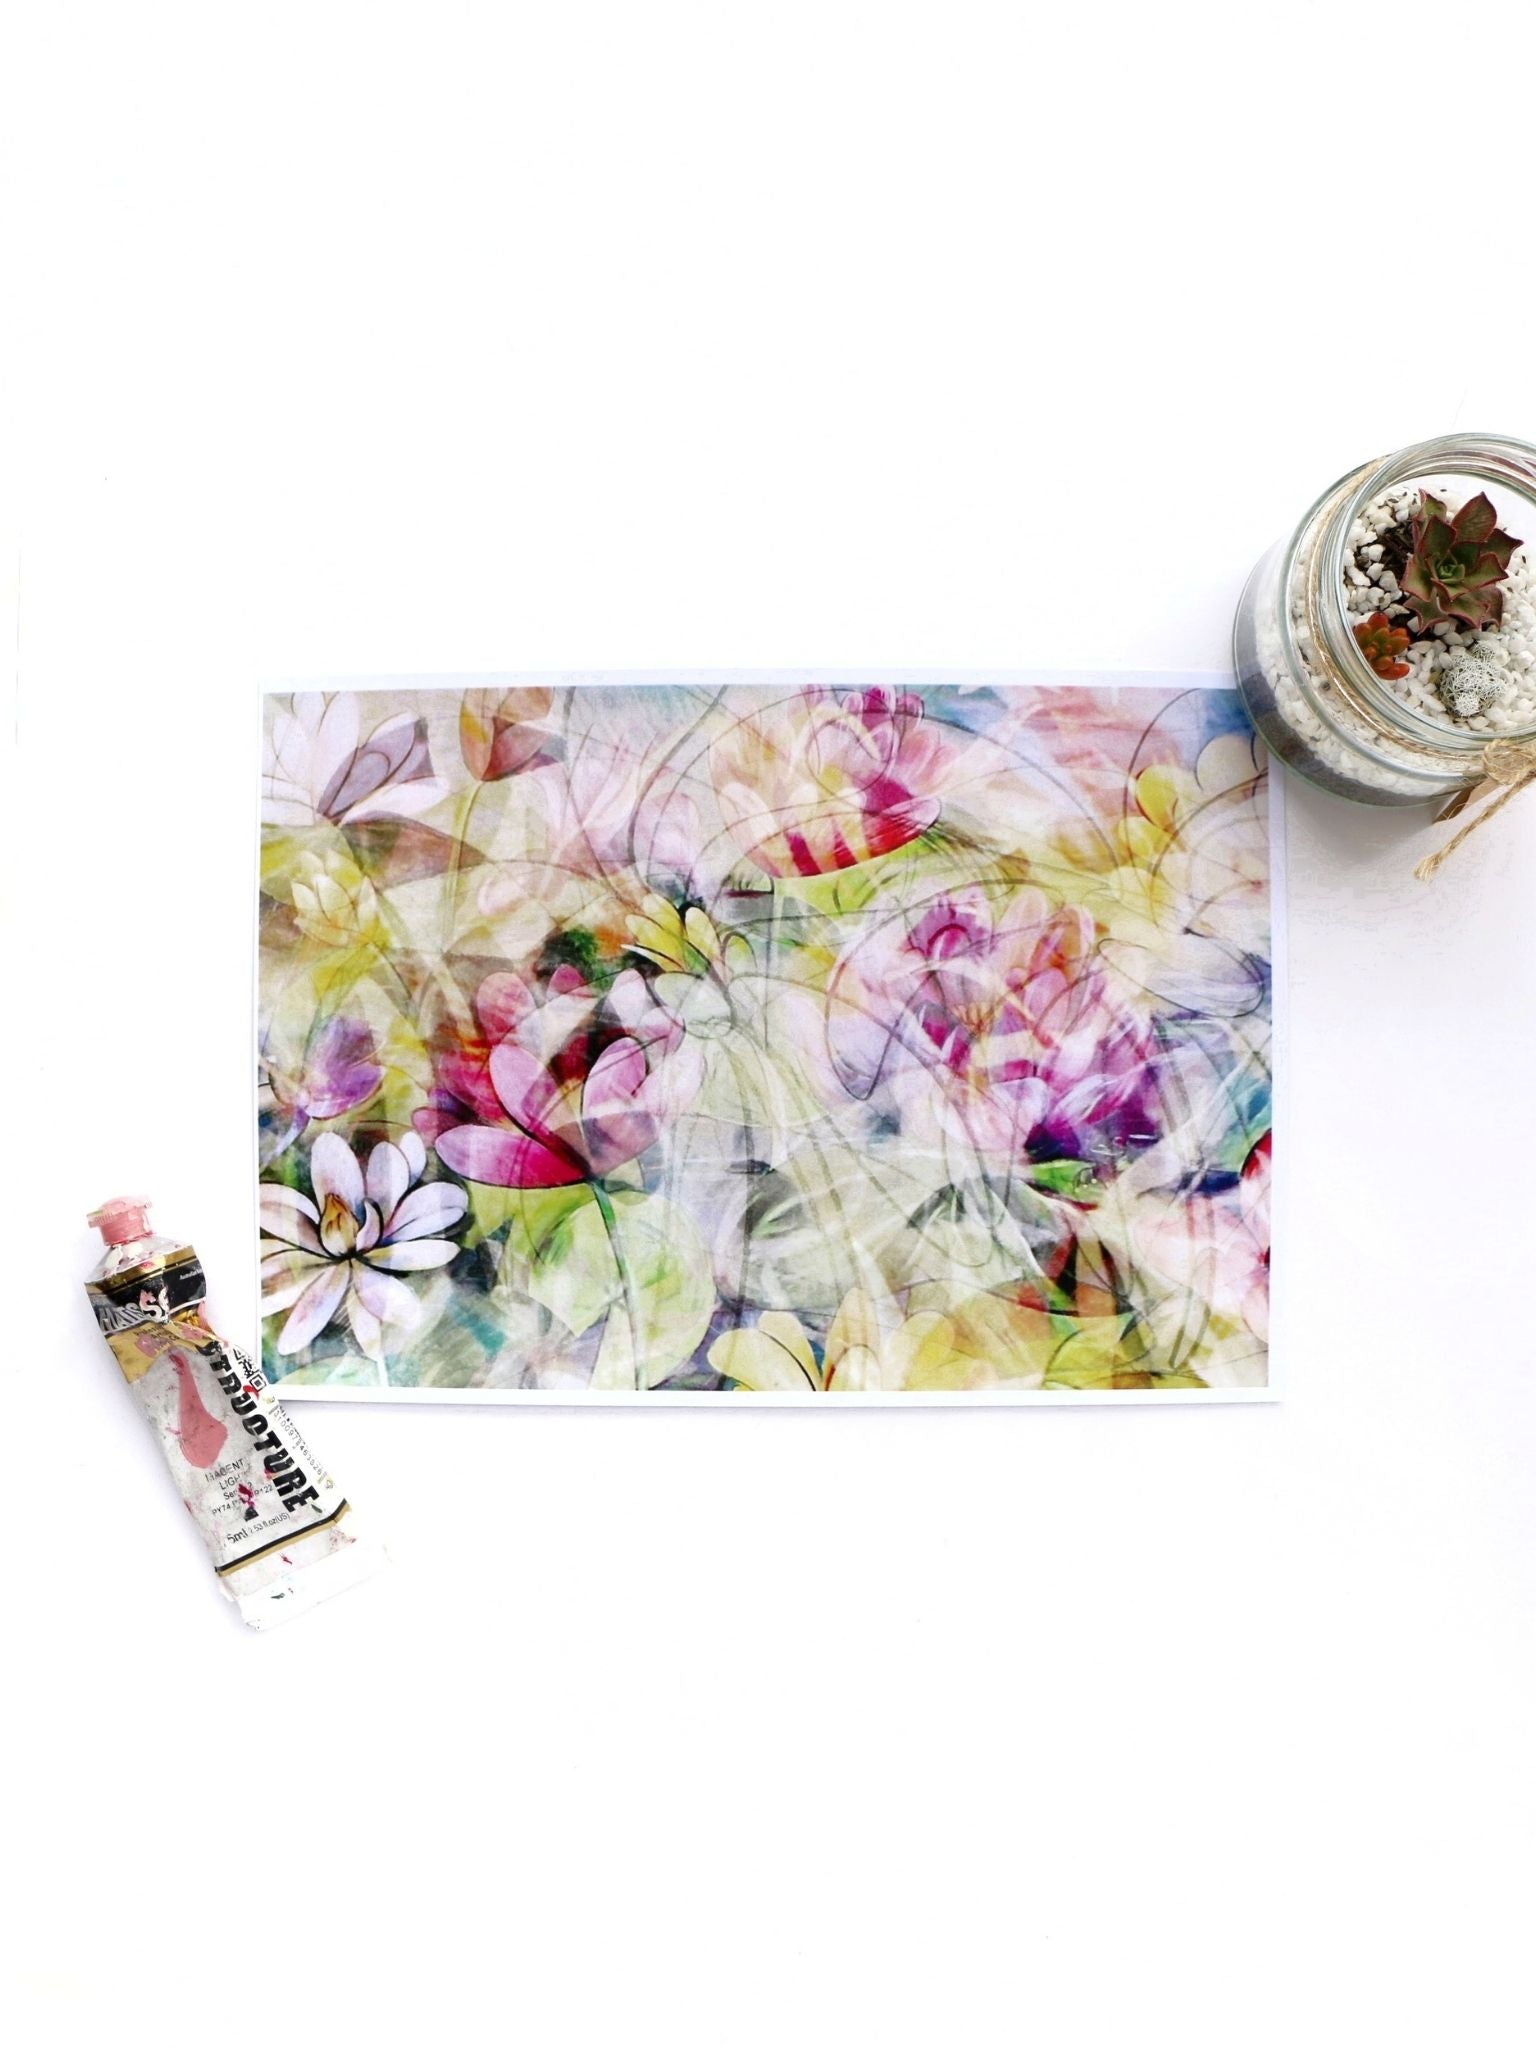 prints-new-years-bloom-art-prints-photo-lillies-pink-yellow-white-colour-pencil-water-colour-art-print